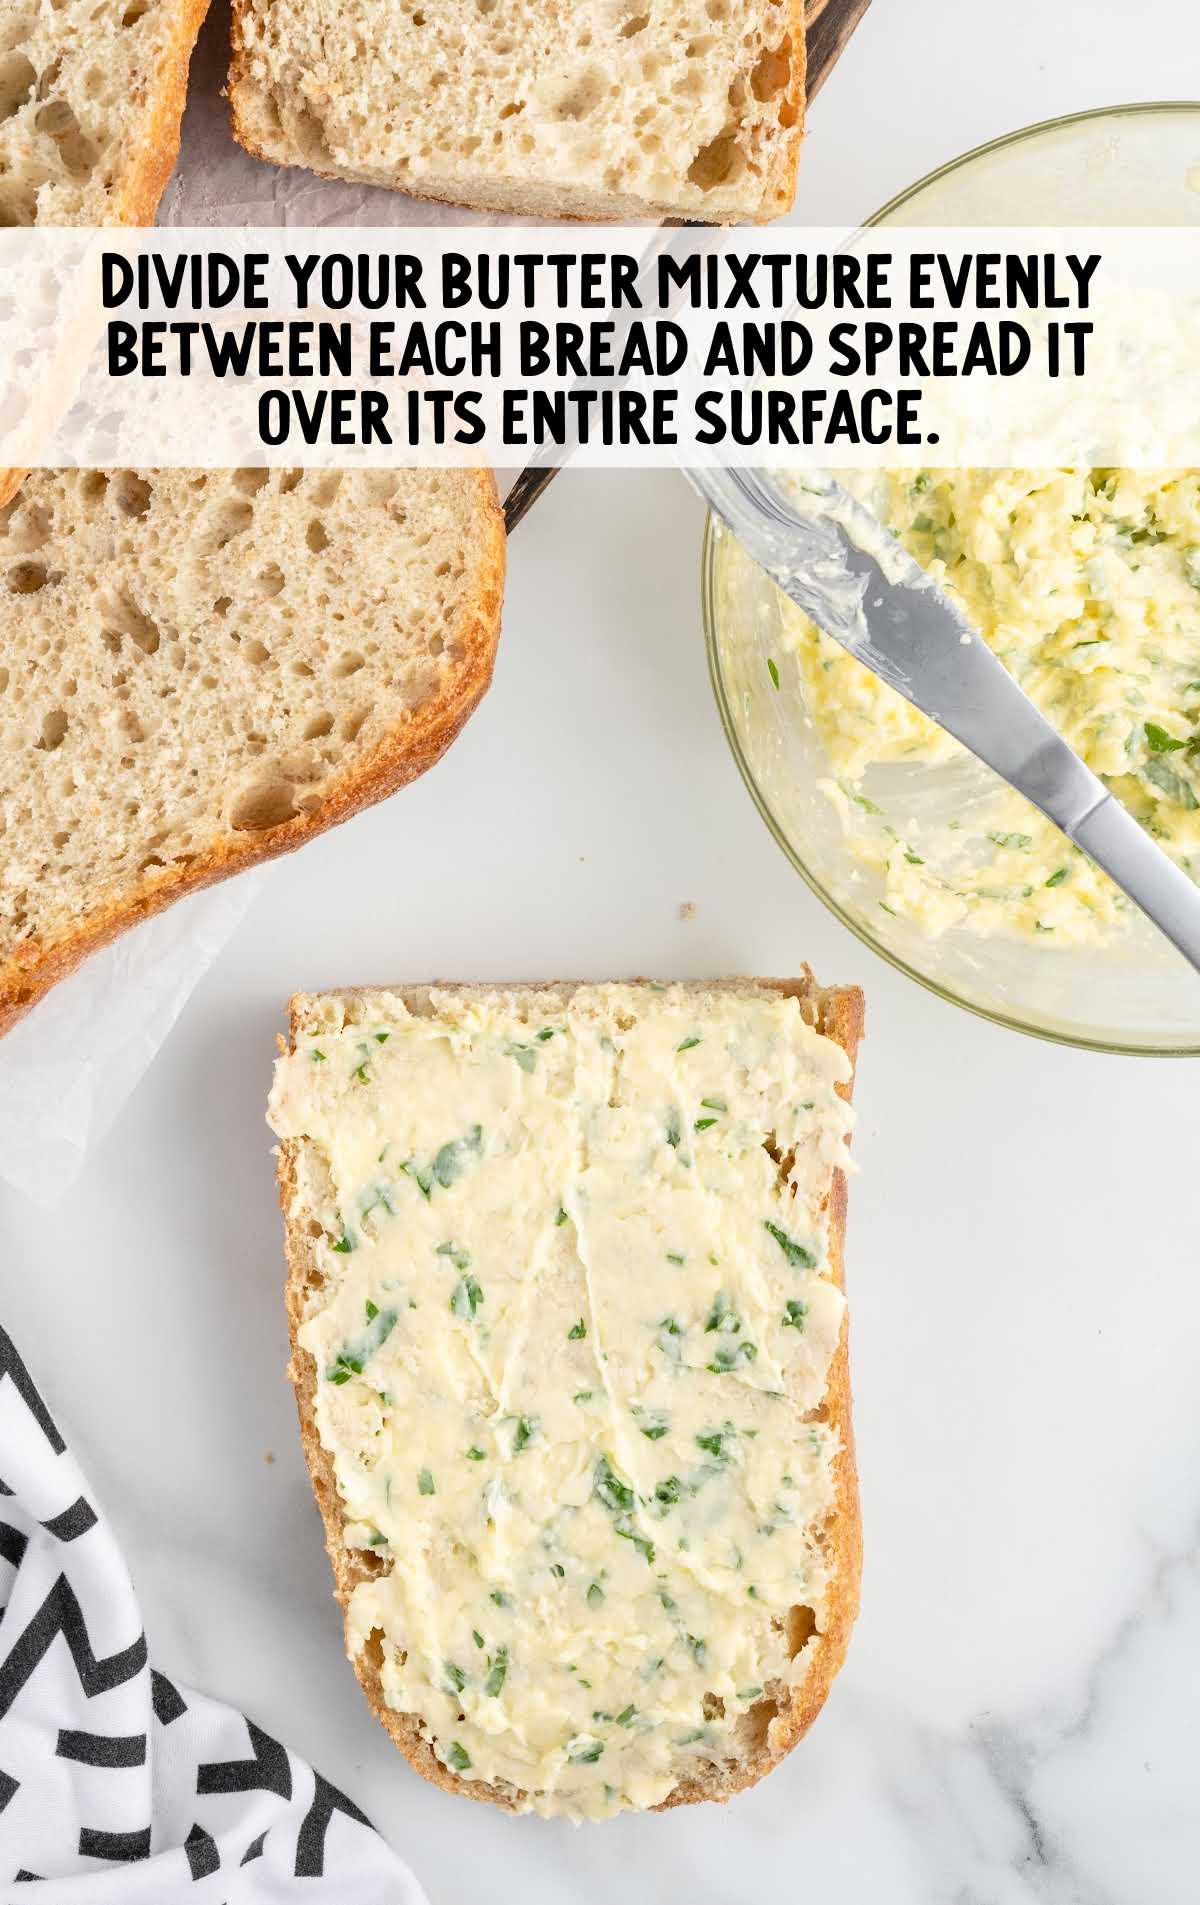 butter spread evenly between each bread